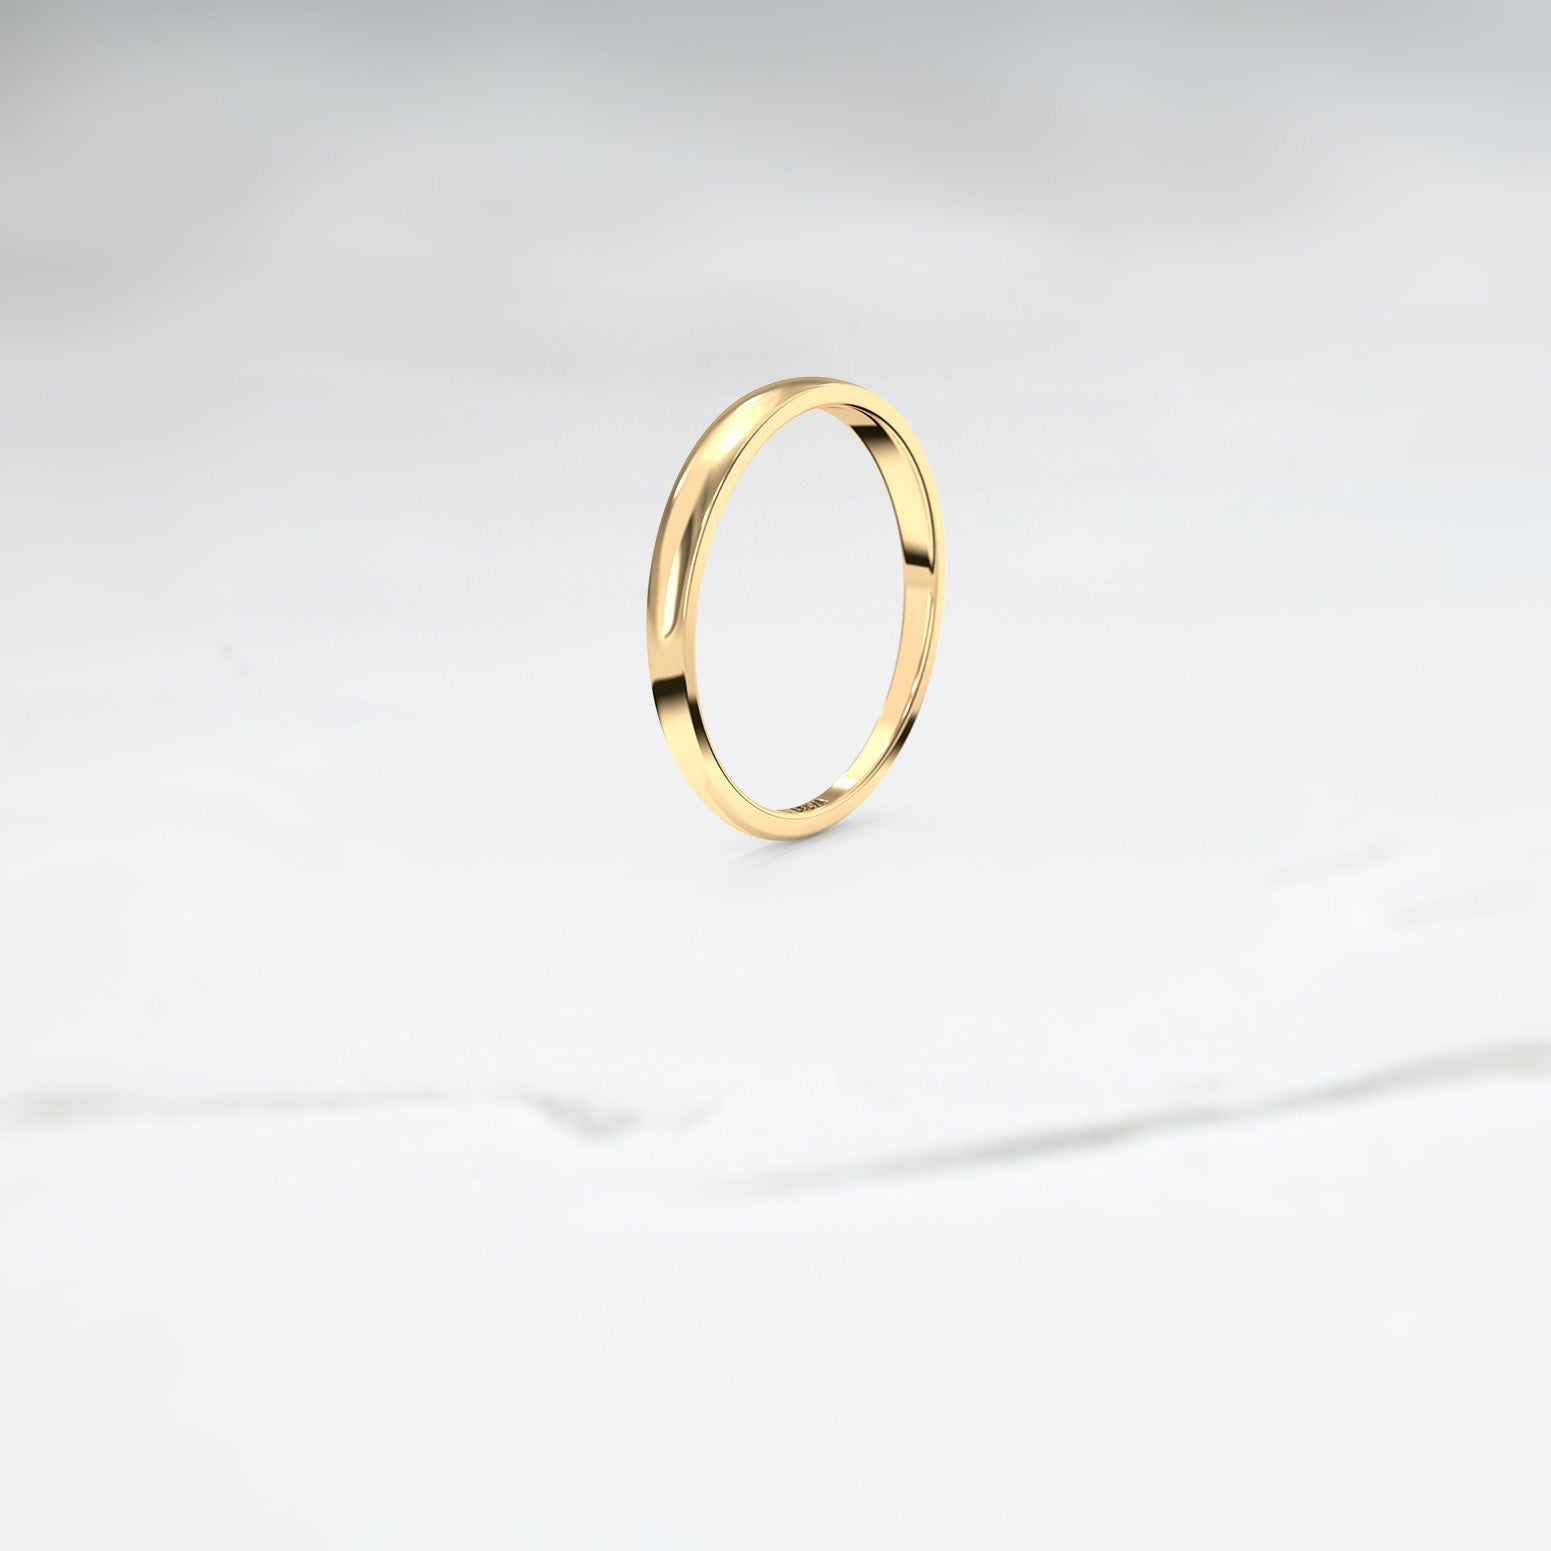 Tapered band - Lelya - bespoke engagement and wedding rings made in Scotland, UK